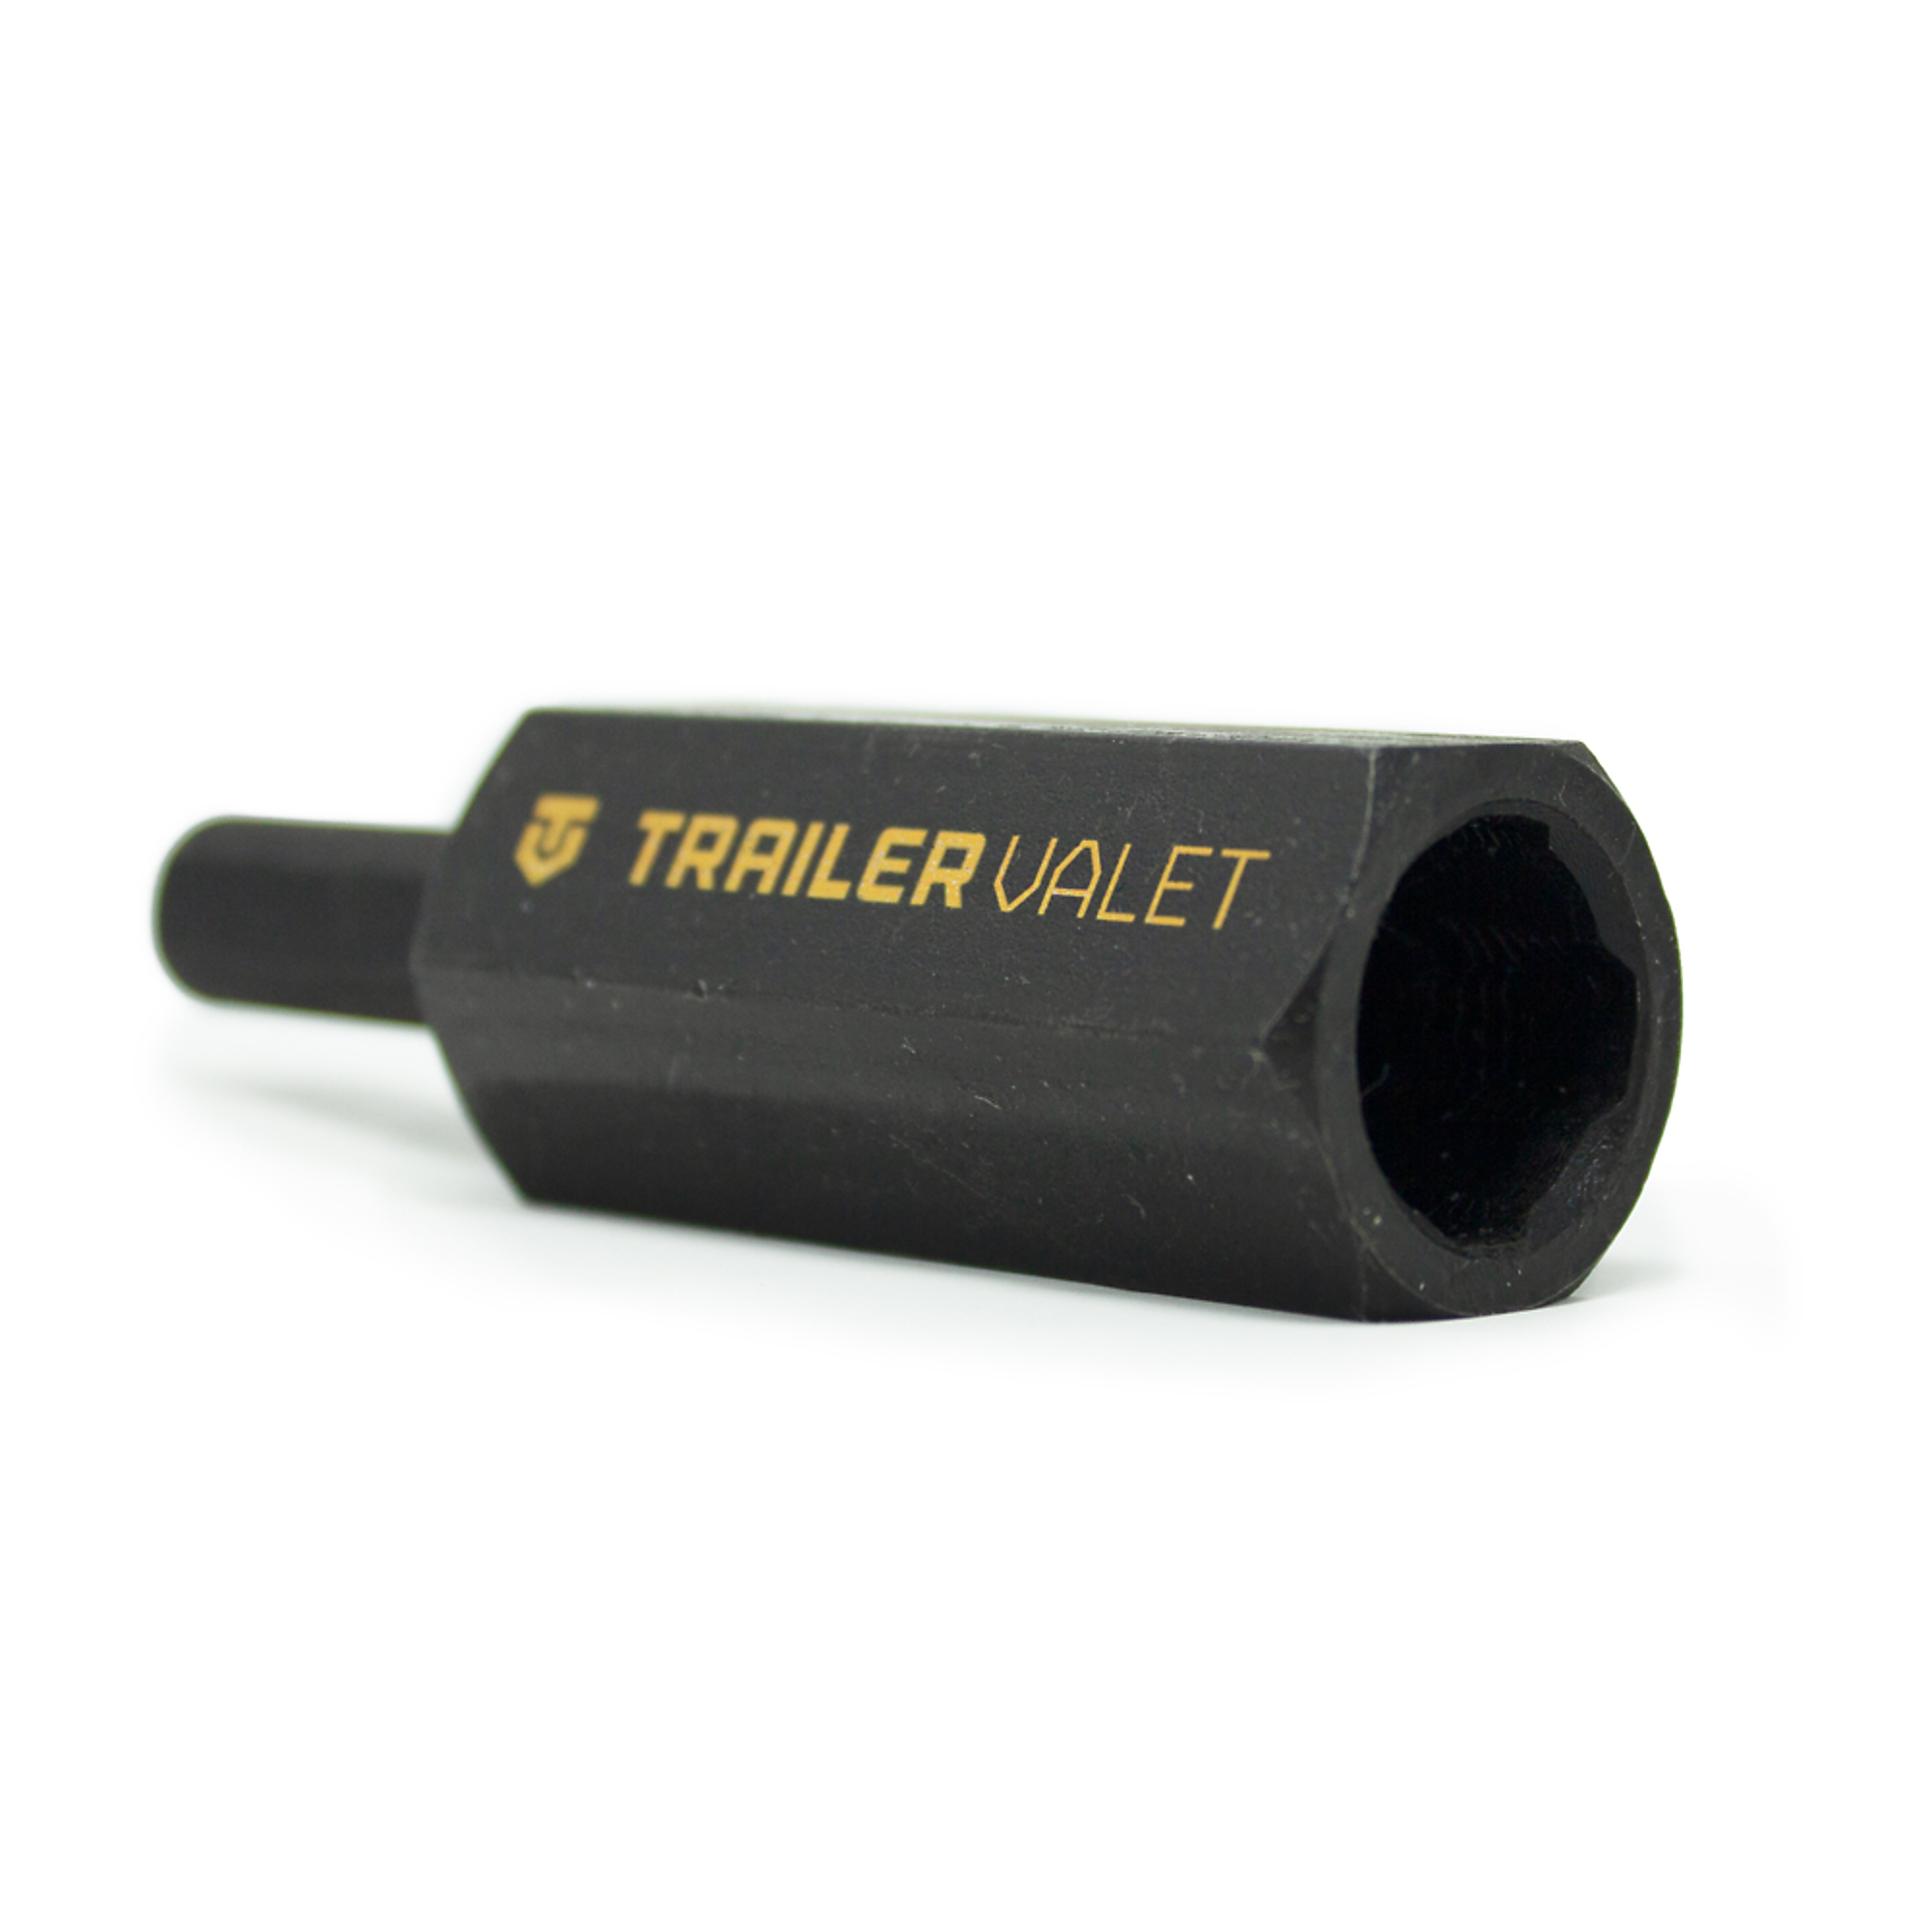 Trailer Valet, Drill Attachment Adapter for XL, JX, 5X, Model TVDA